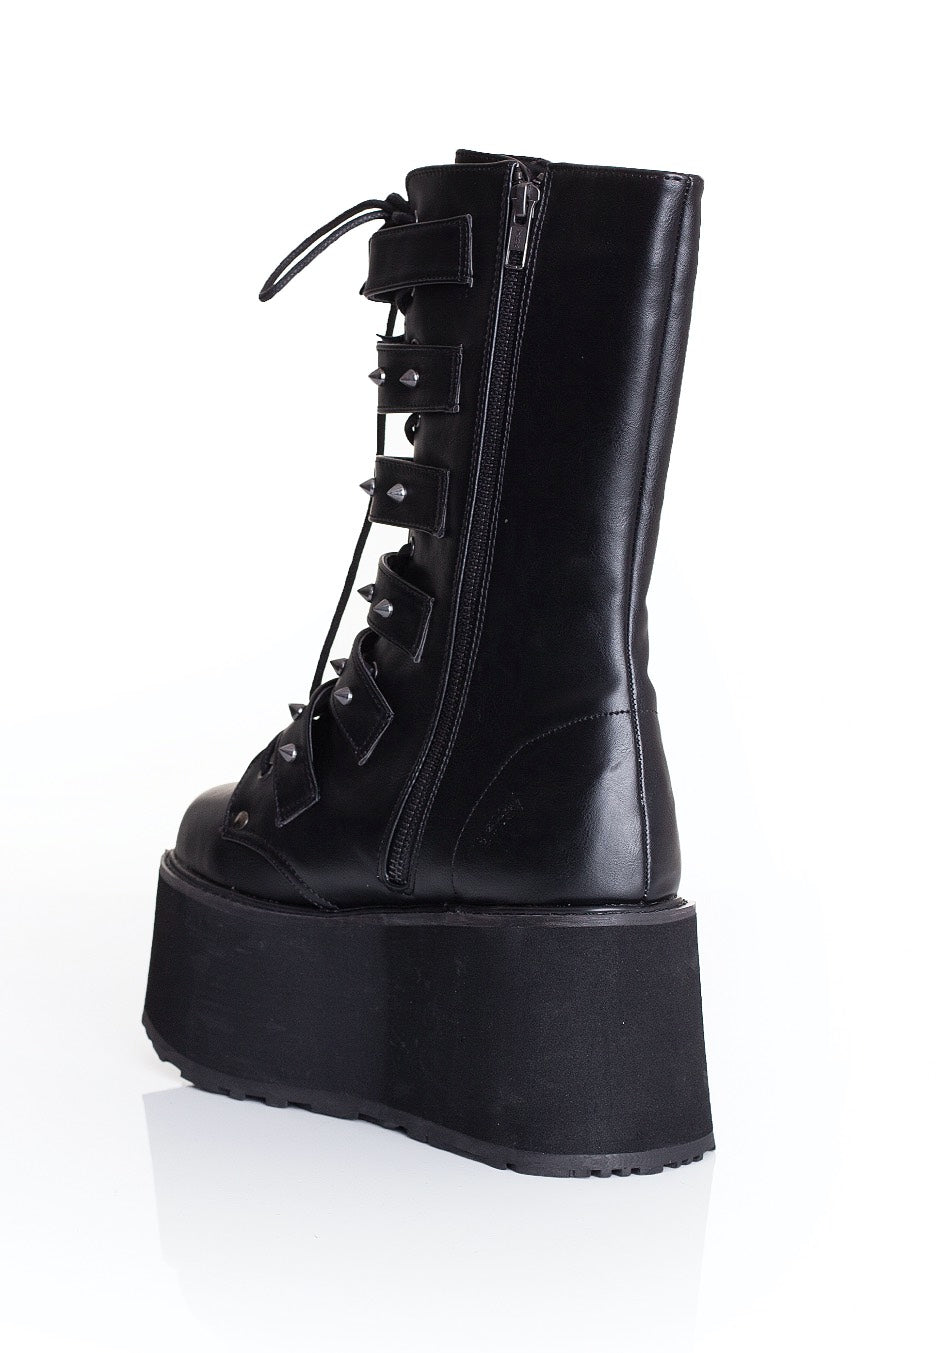 DemoniaCult - Damned Black Vegan Leather - Girl Shoes